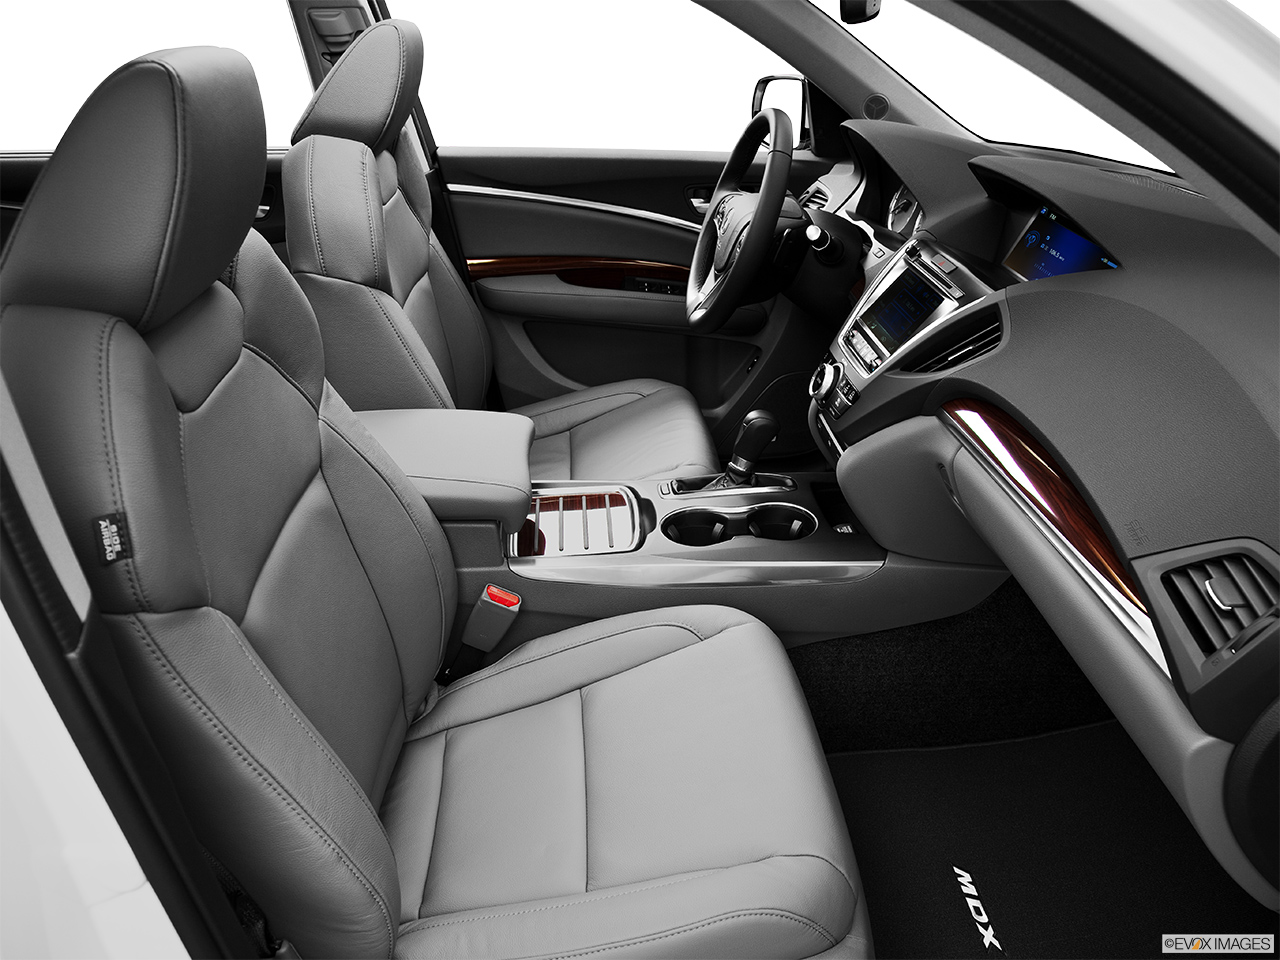 2014 Acura MDX SH-AWD Passenger seat. 